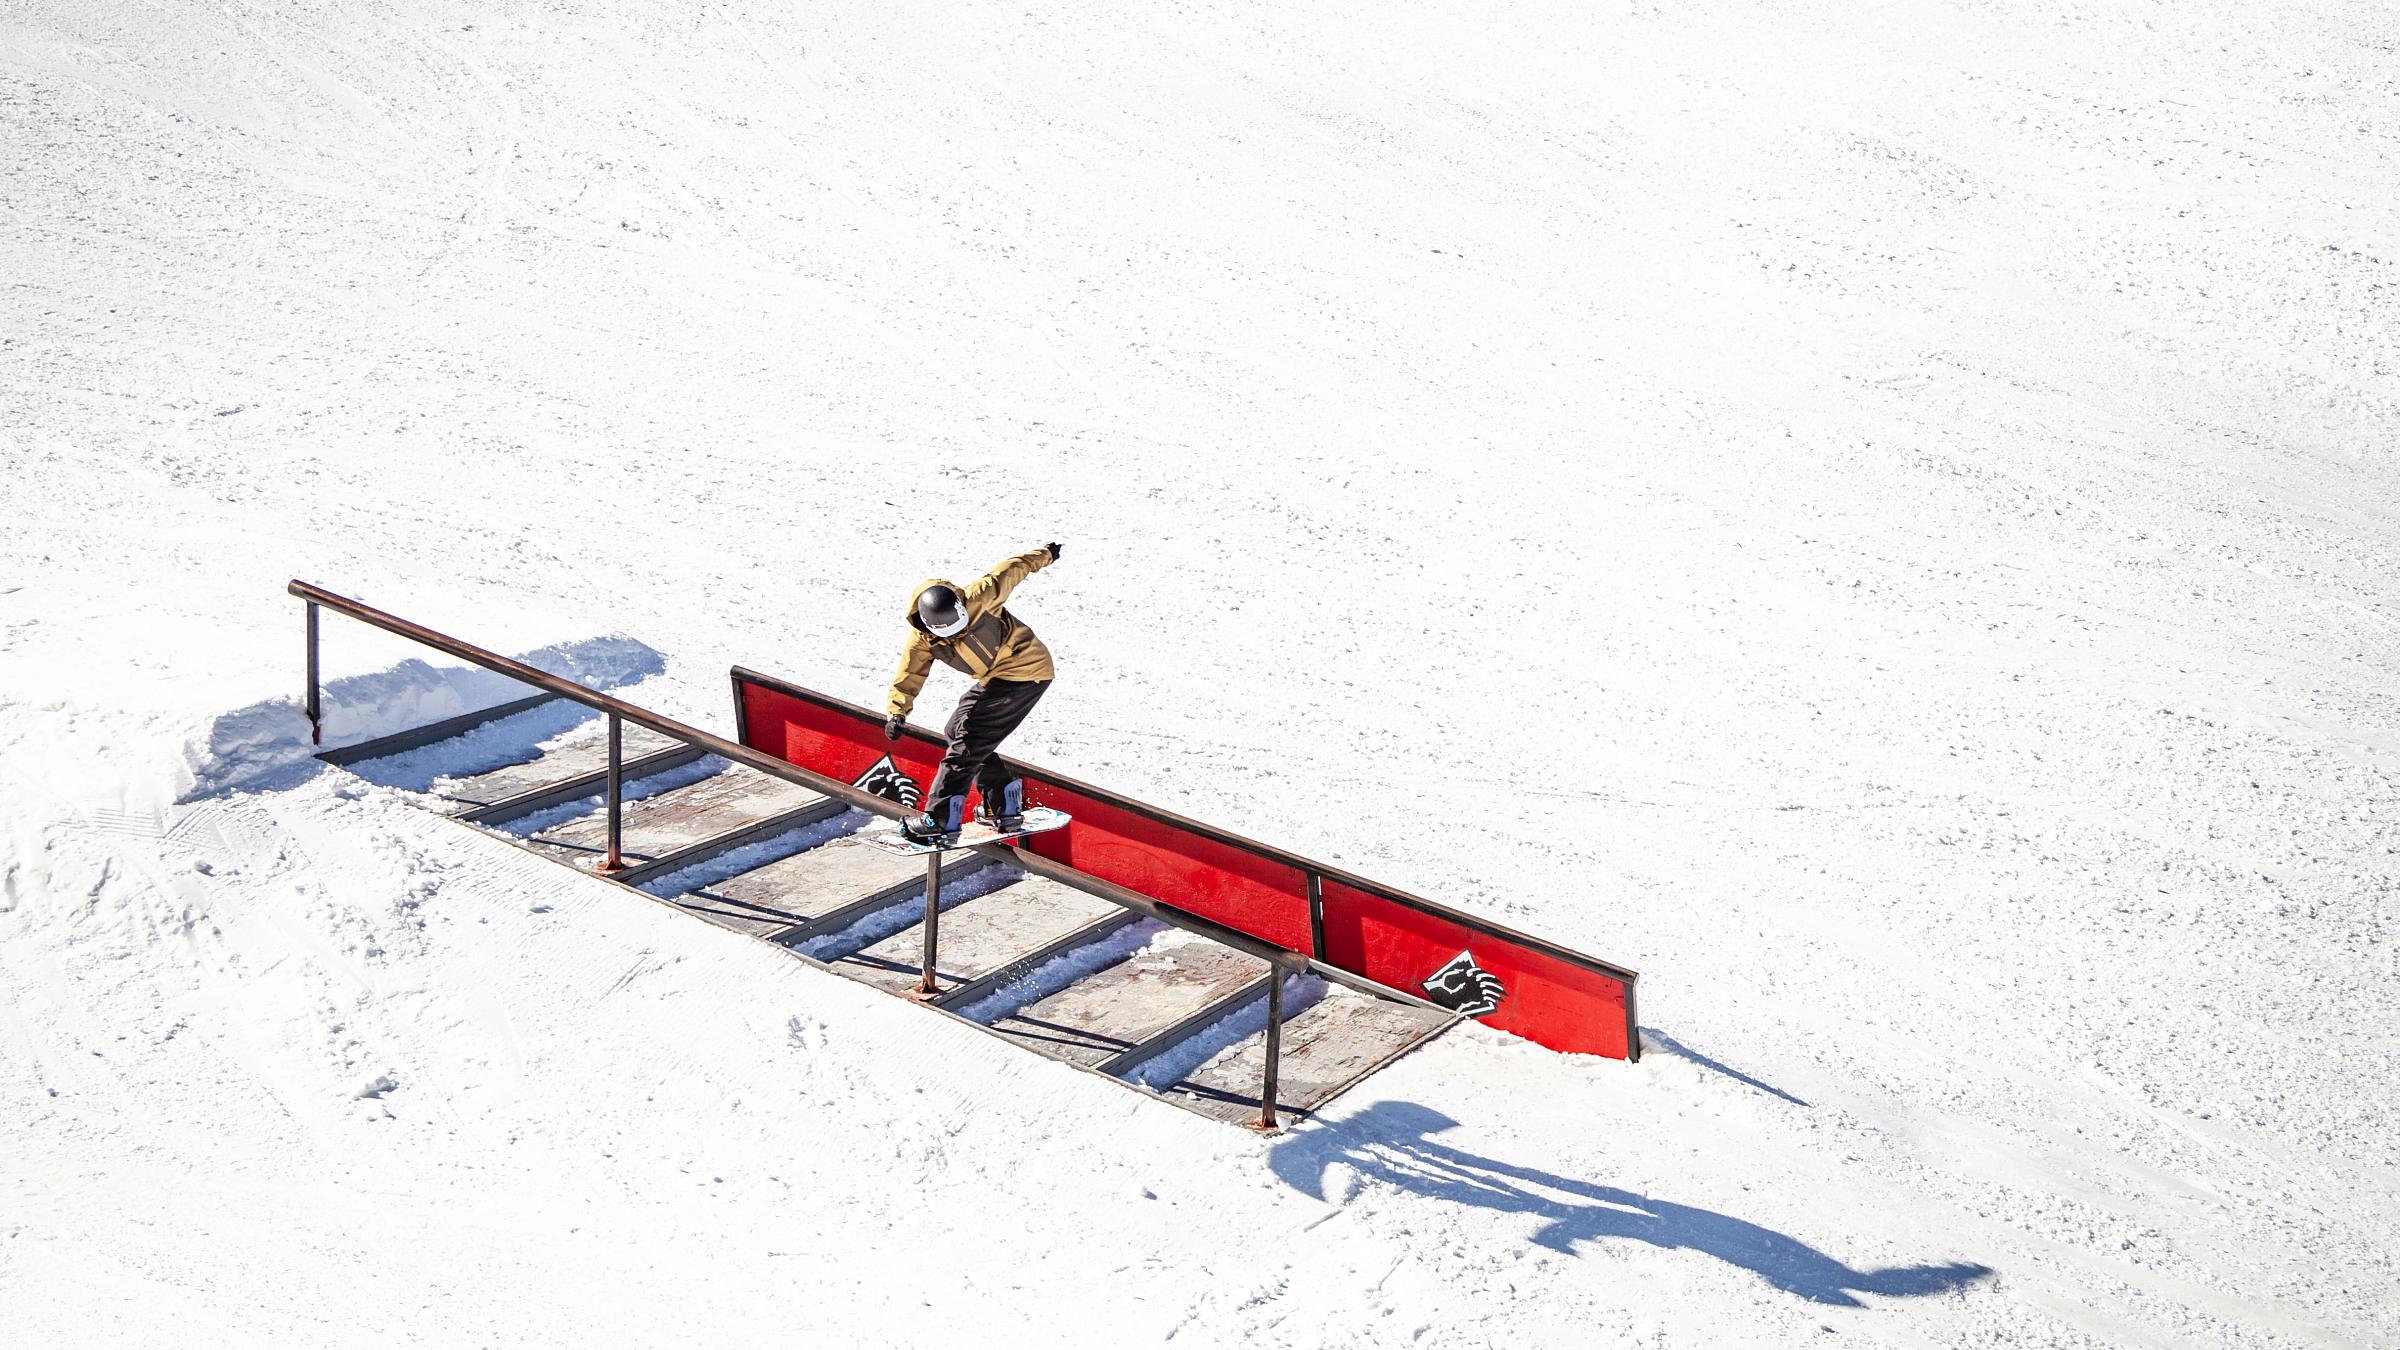 Snowboarder going down a rail